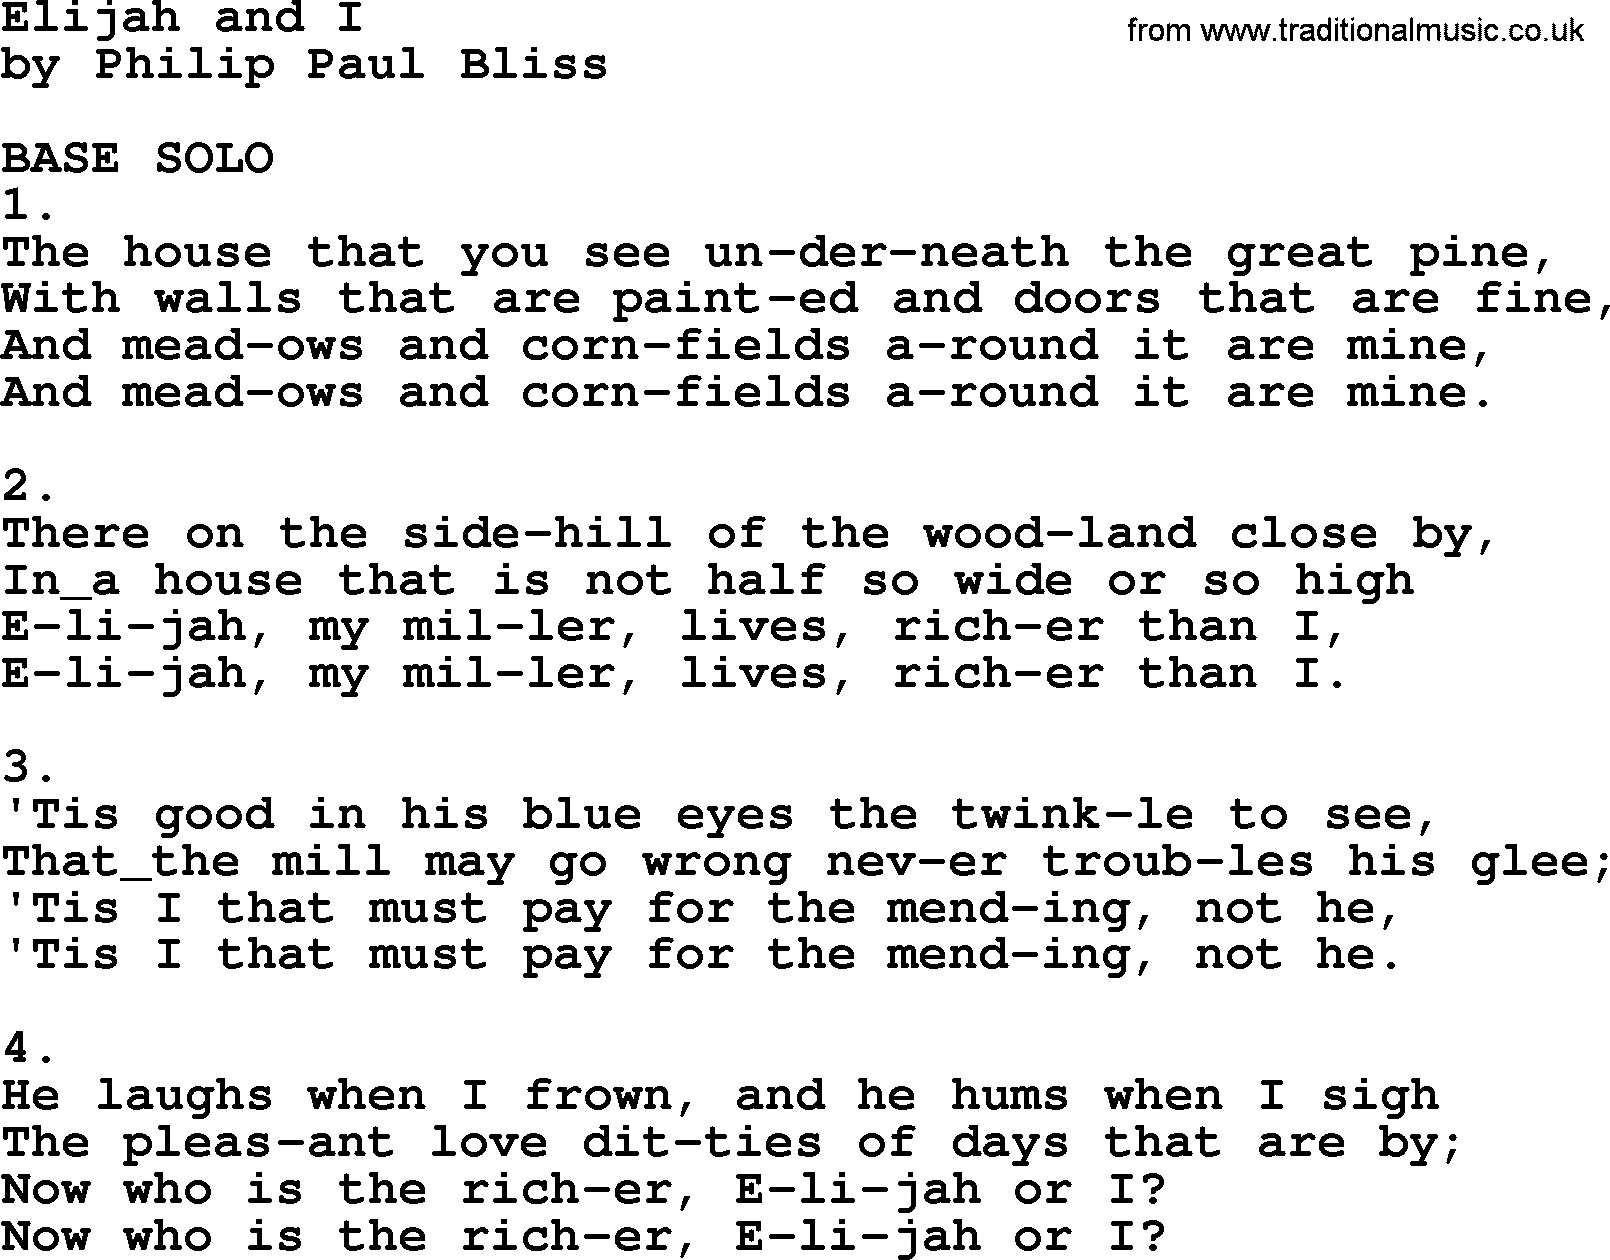 Philip Bliss Song: Elijah And I, lyrics